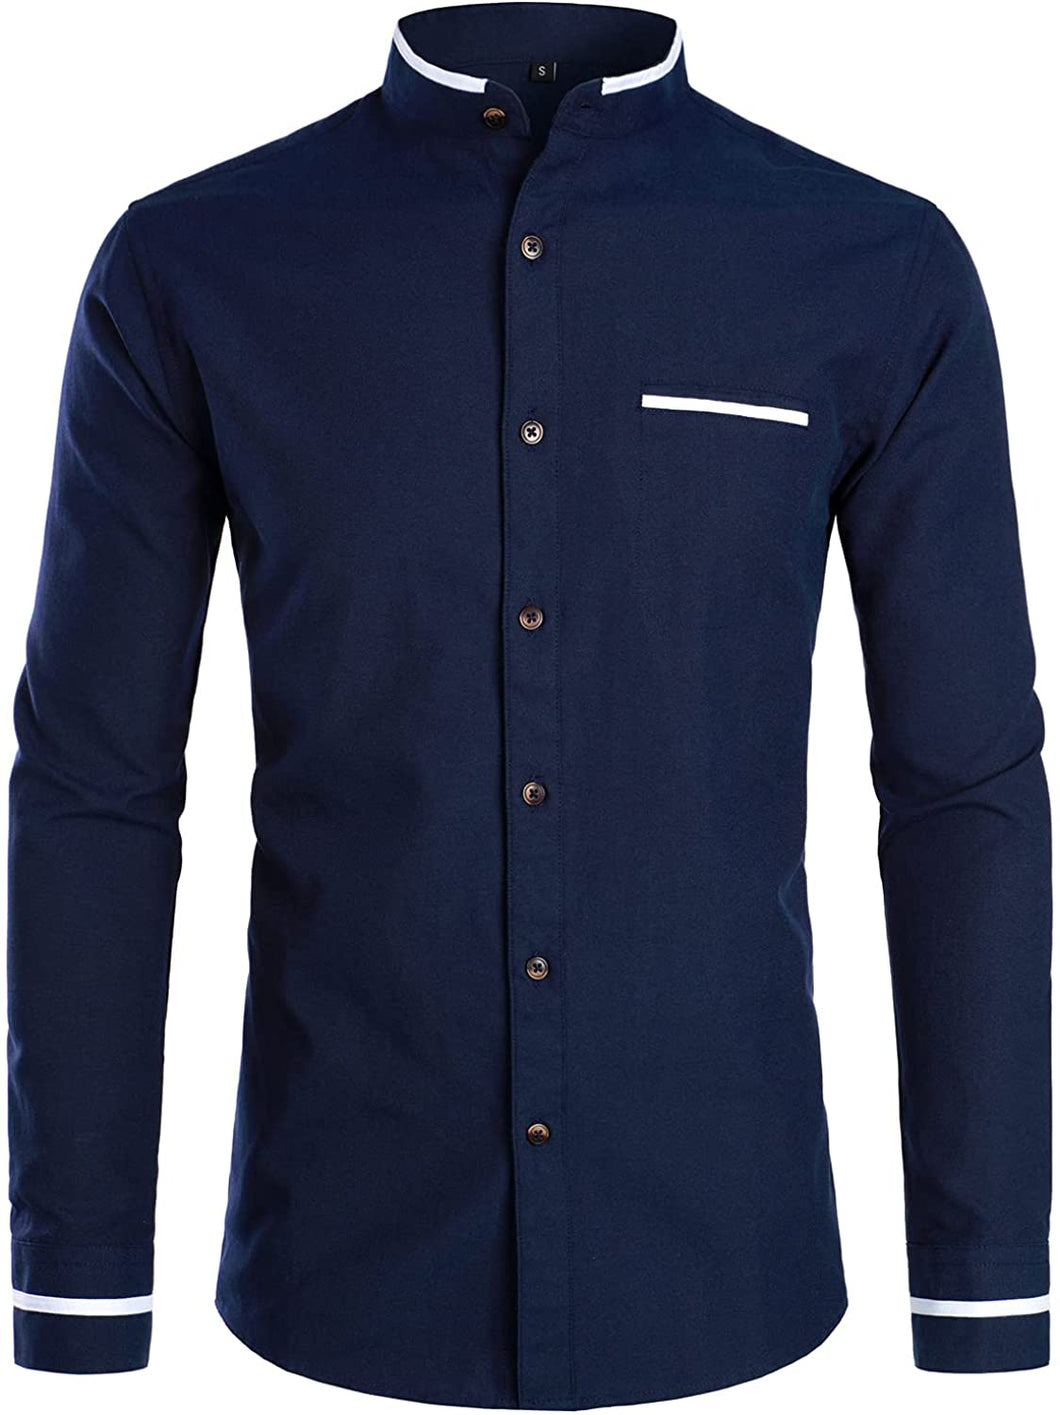 Mandarin Collar Slim Fit Button Down Black Long Sleeve Shirt with Pocket